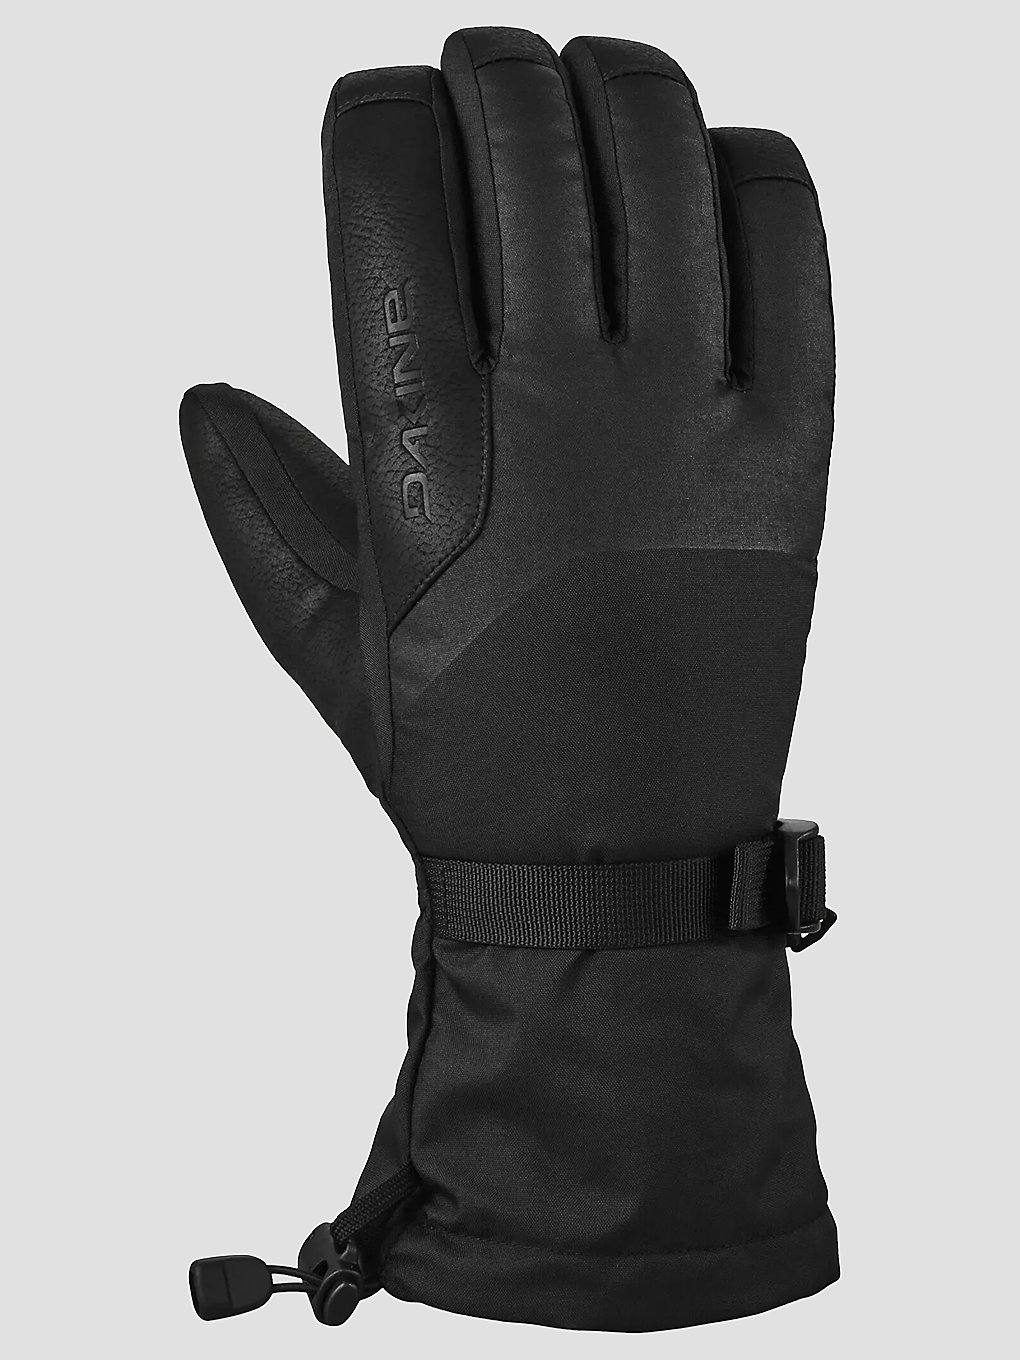 Dakine Nova Handschuhe black kaufen